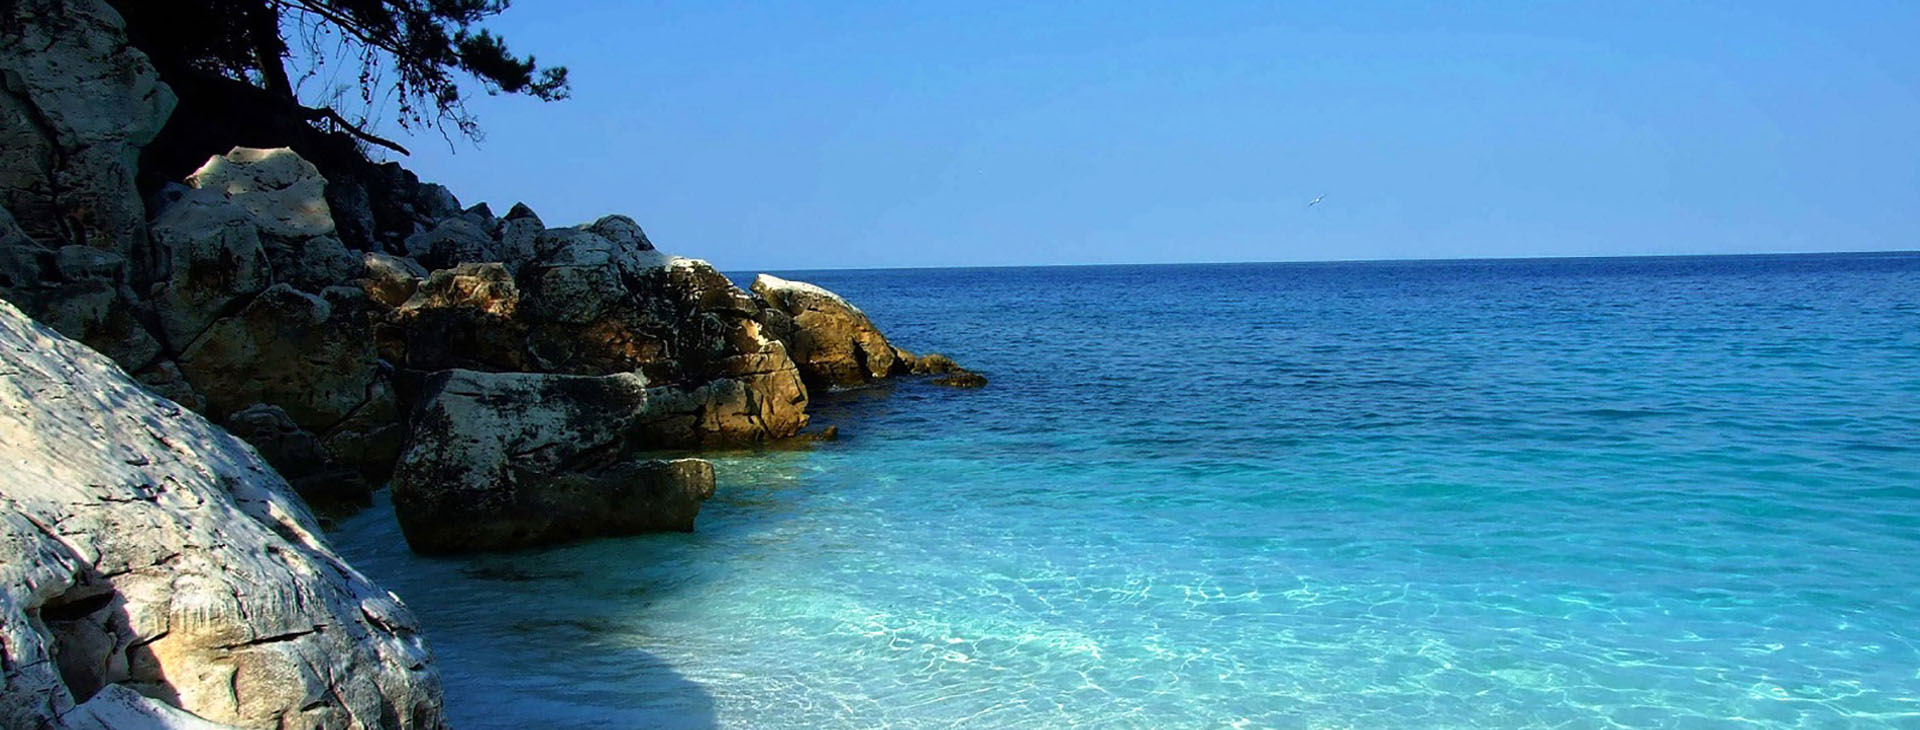 Marble beach, Thassos island